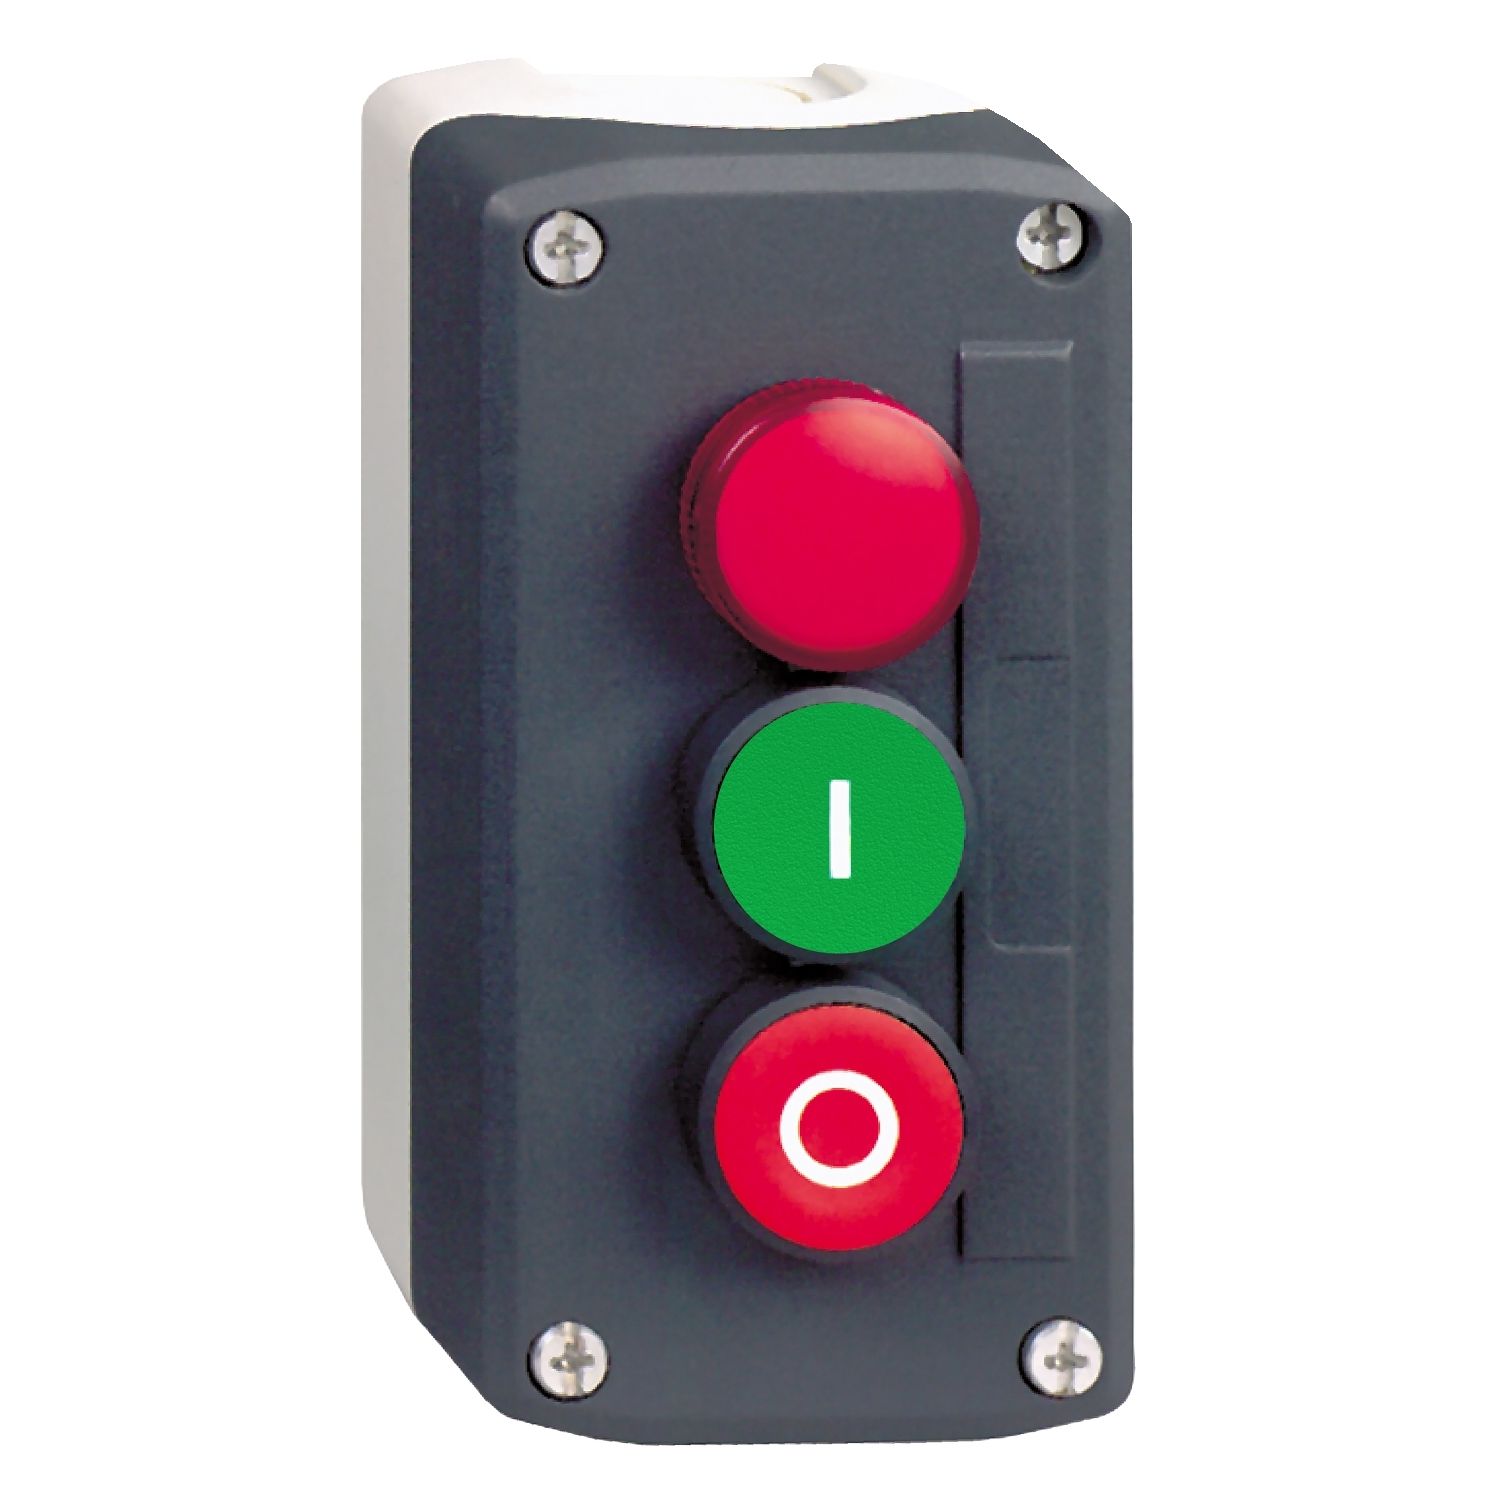 XALD363M Control station, Harmony XALD, XALK, plastic, dark grey, 1 red pilot light 1 green flush I 1 red flush O push buttons, 22mm, spring return